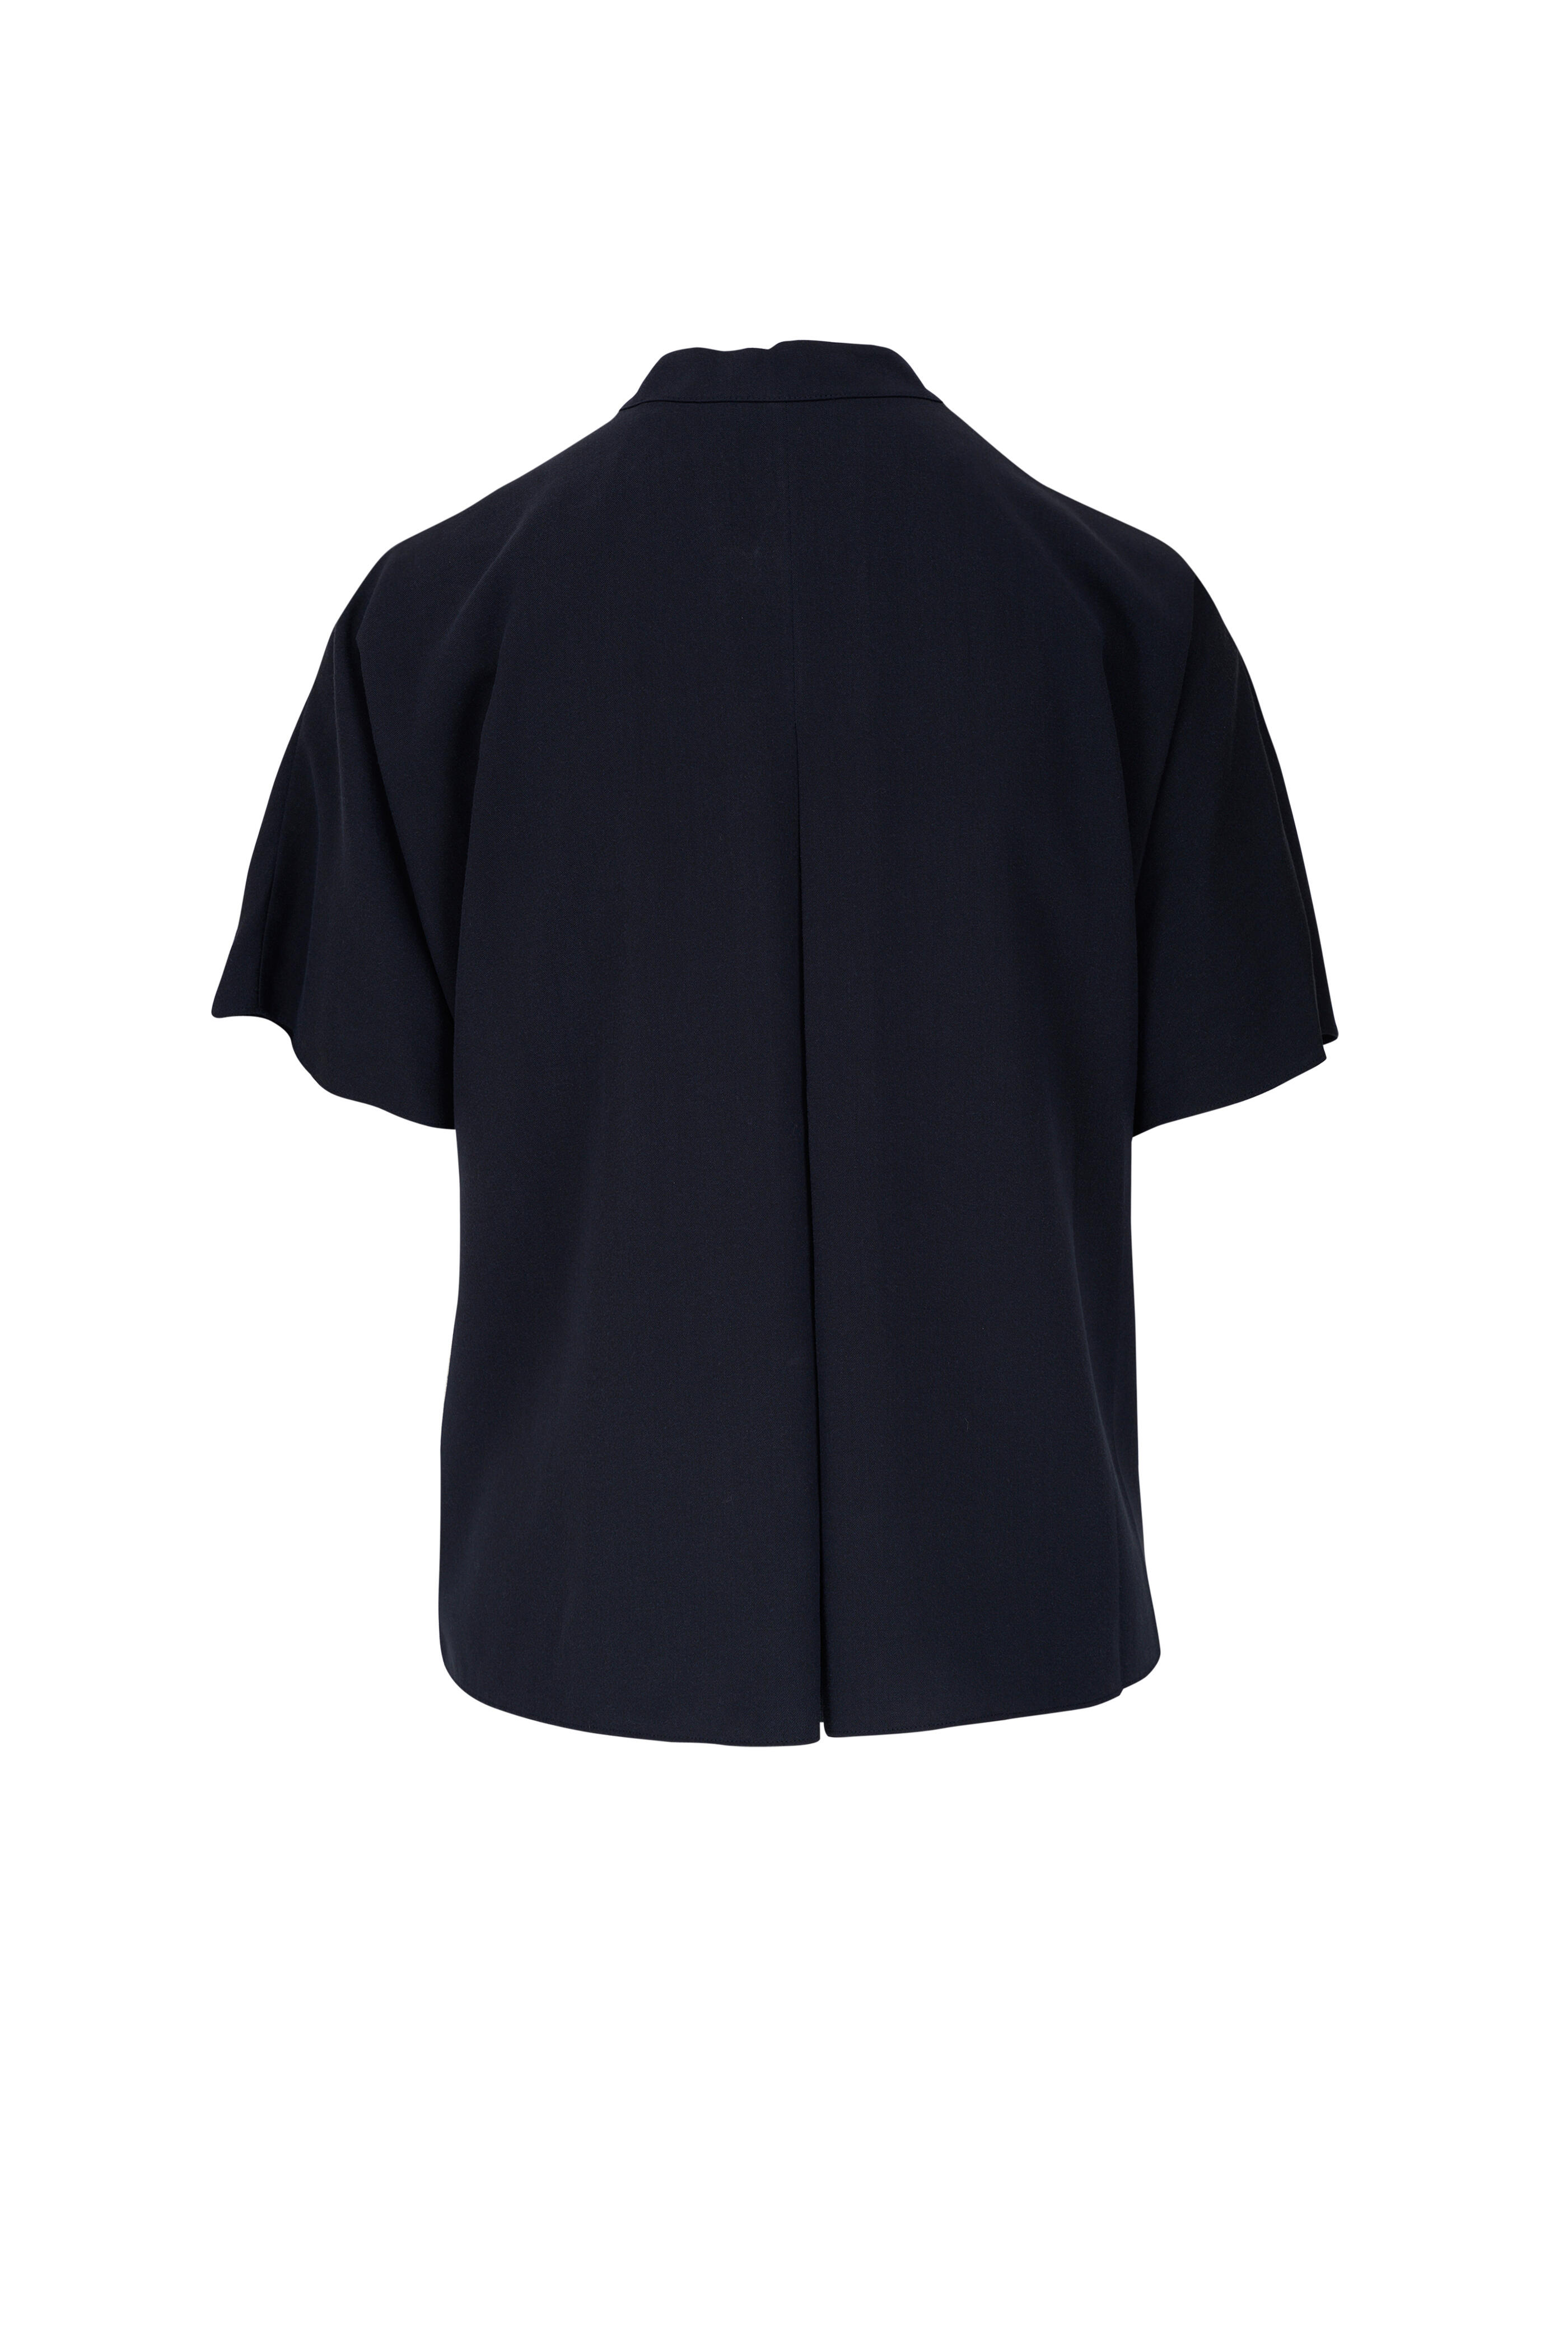 Dolman Sleeve Shirt (Unisex)